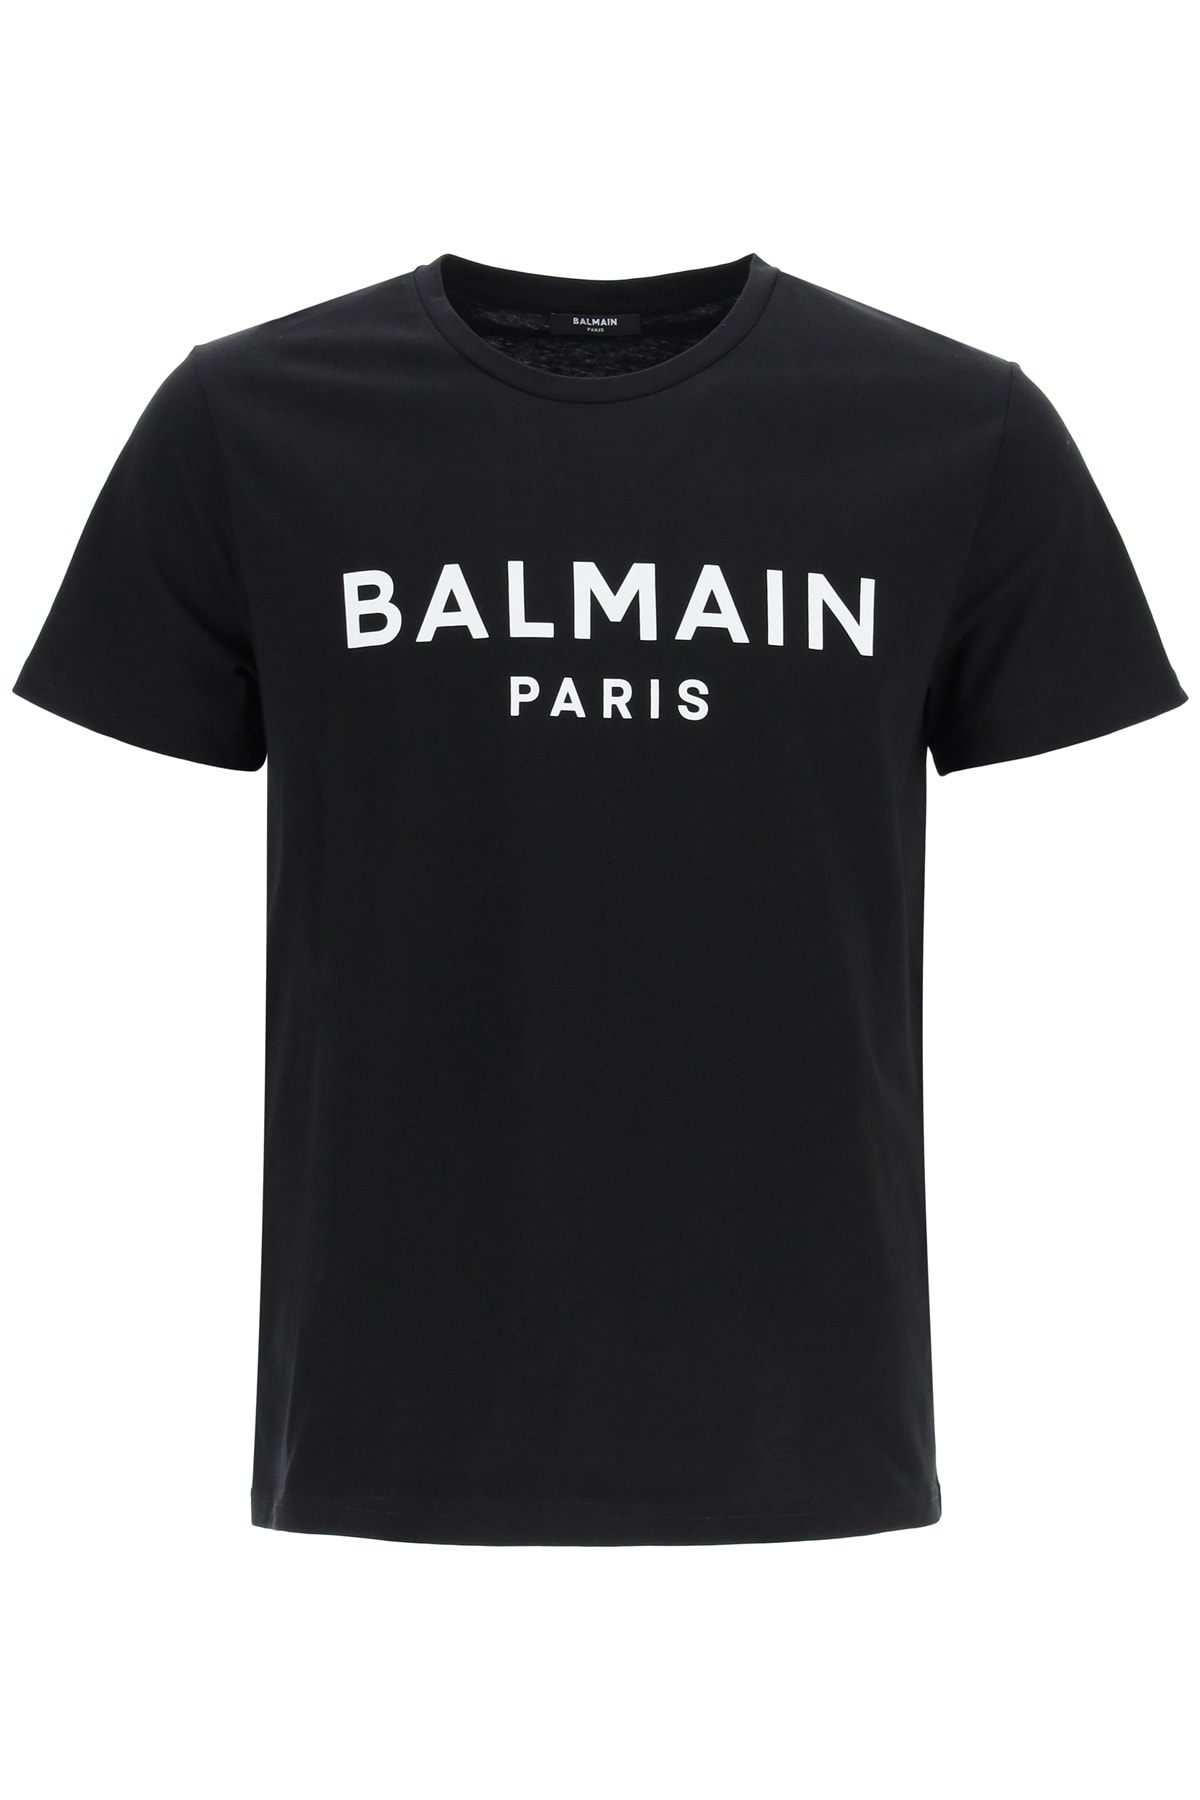 Balmain Paris Print T-shirt